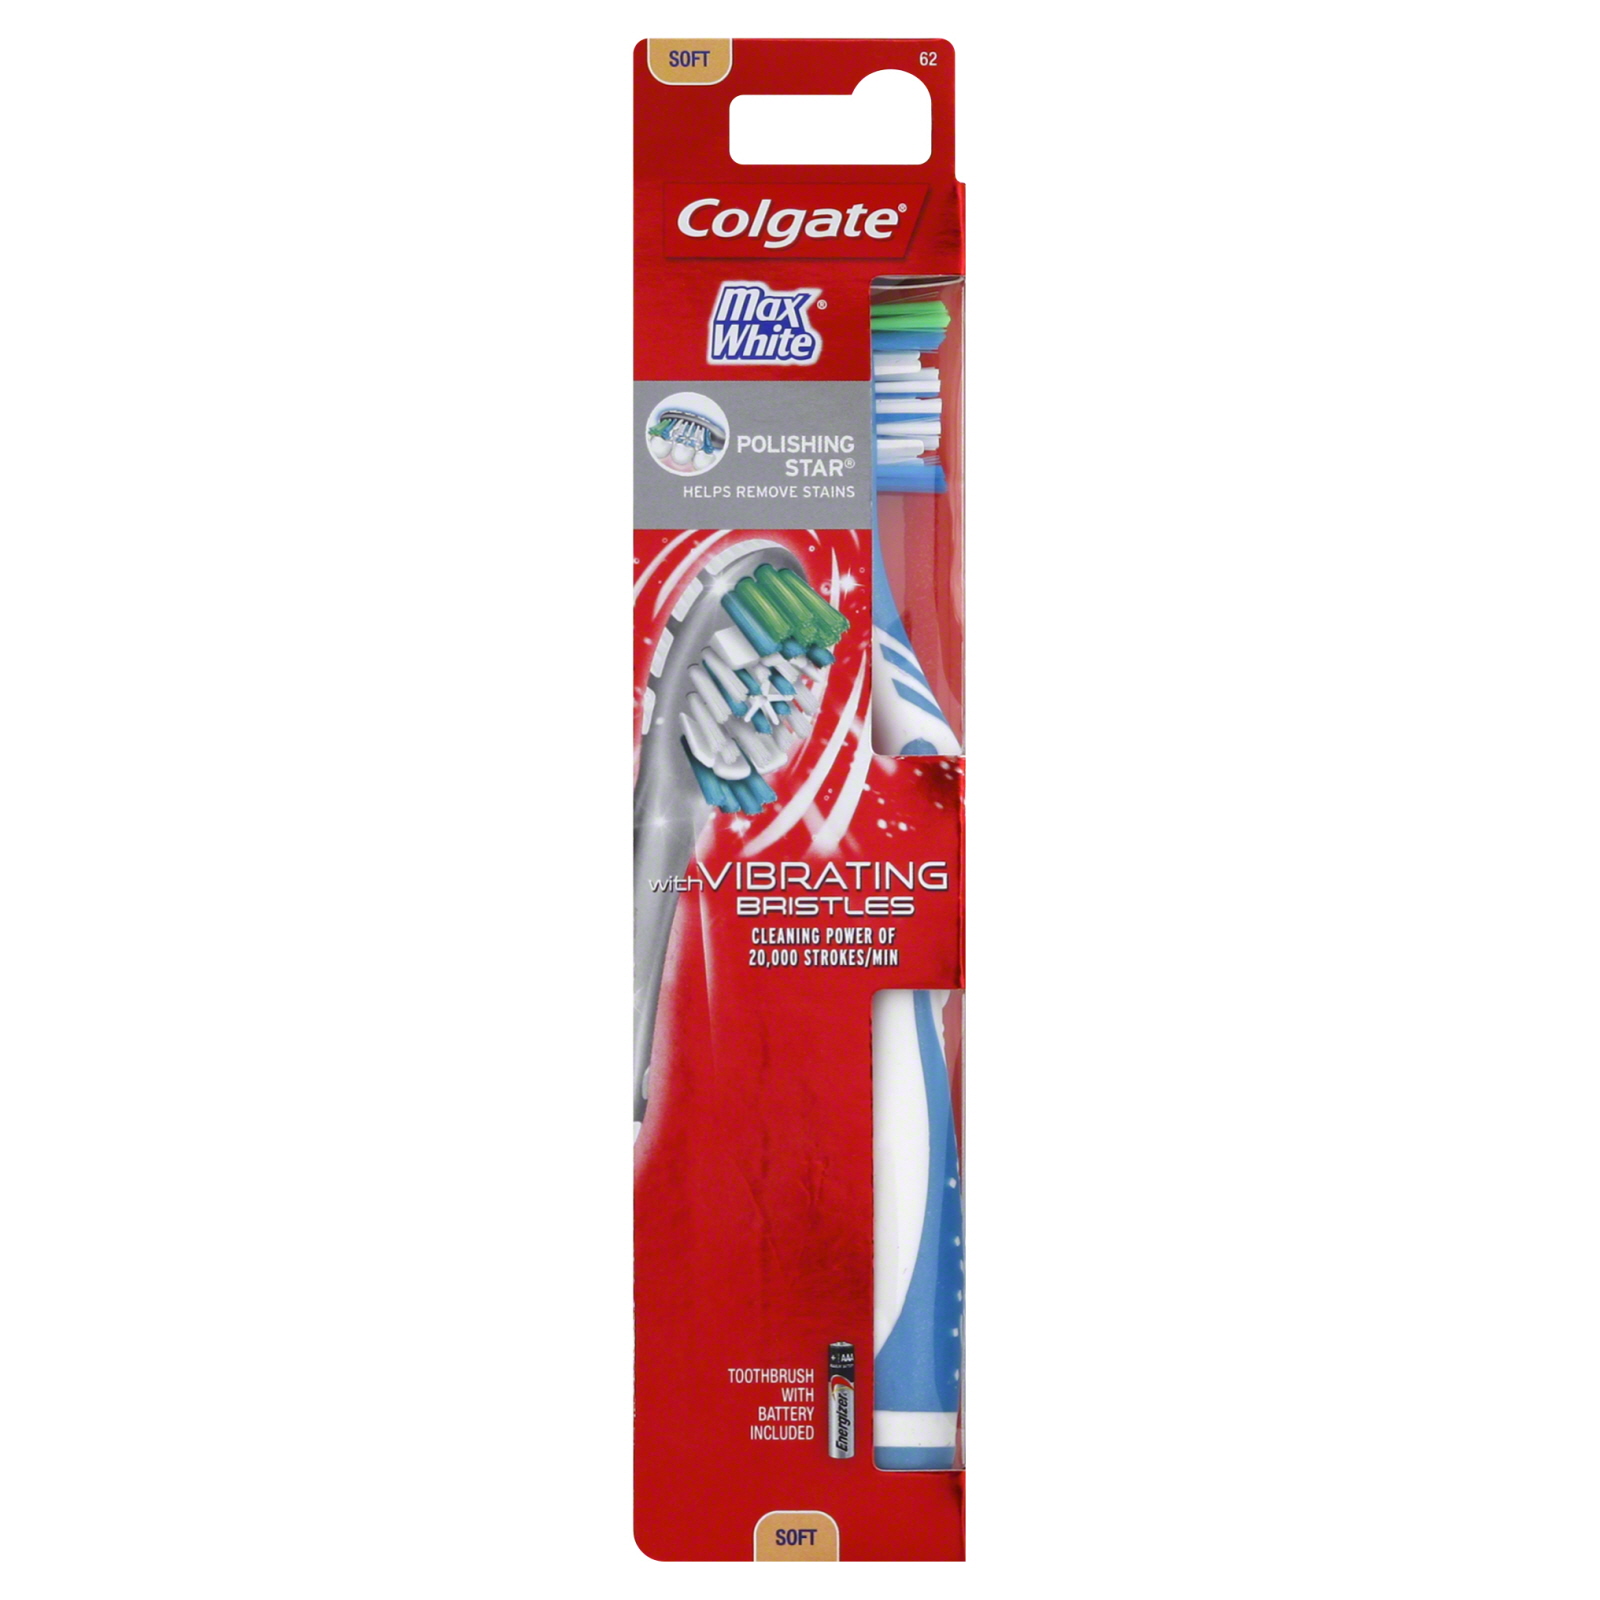 Colgate-Palmolive Max White Sonic Power Powered Toothbrush, Soft 62 1 toothbrush